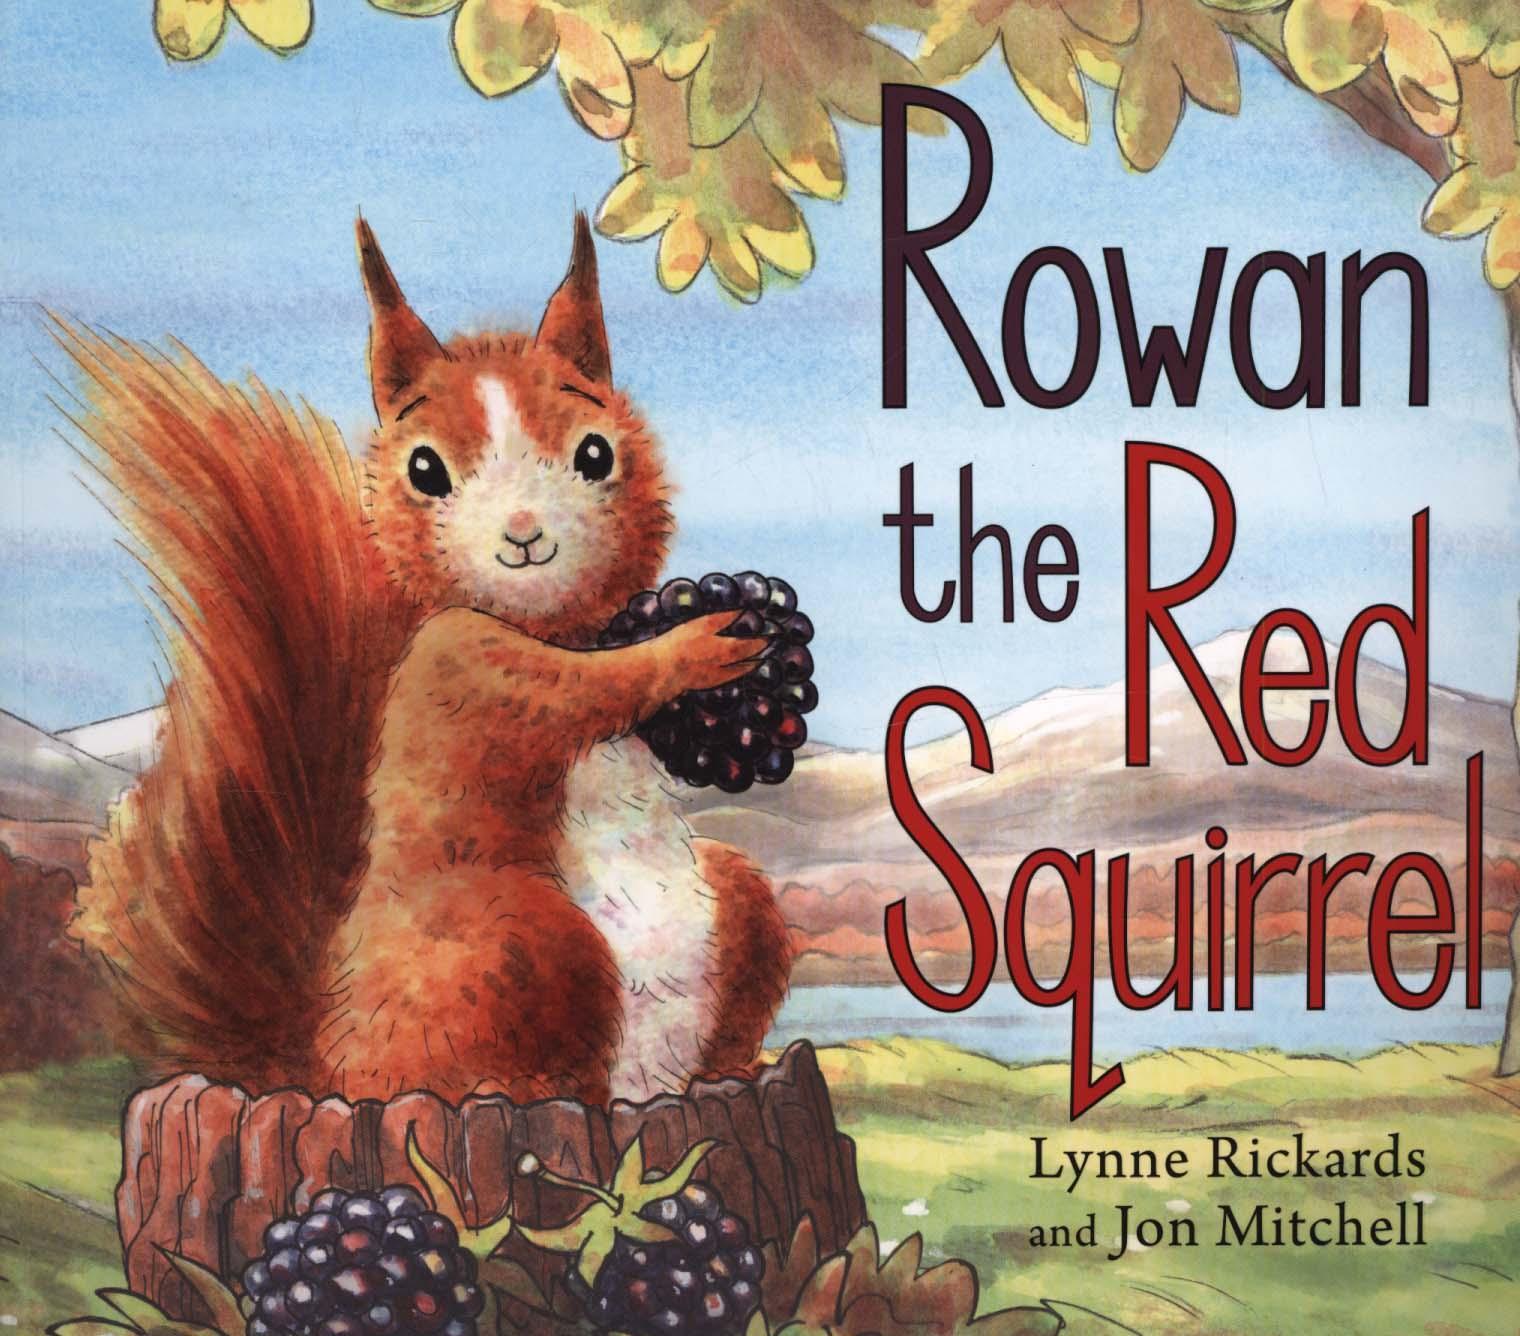 Rowan the Red Squirrel